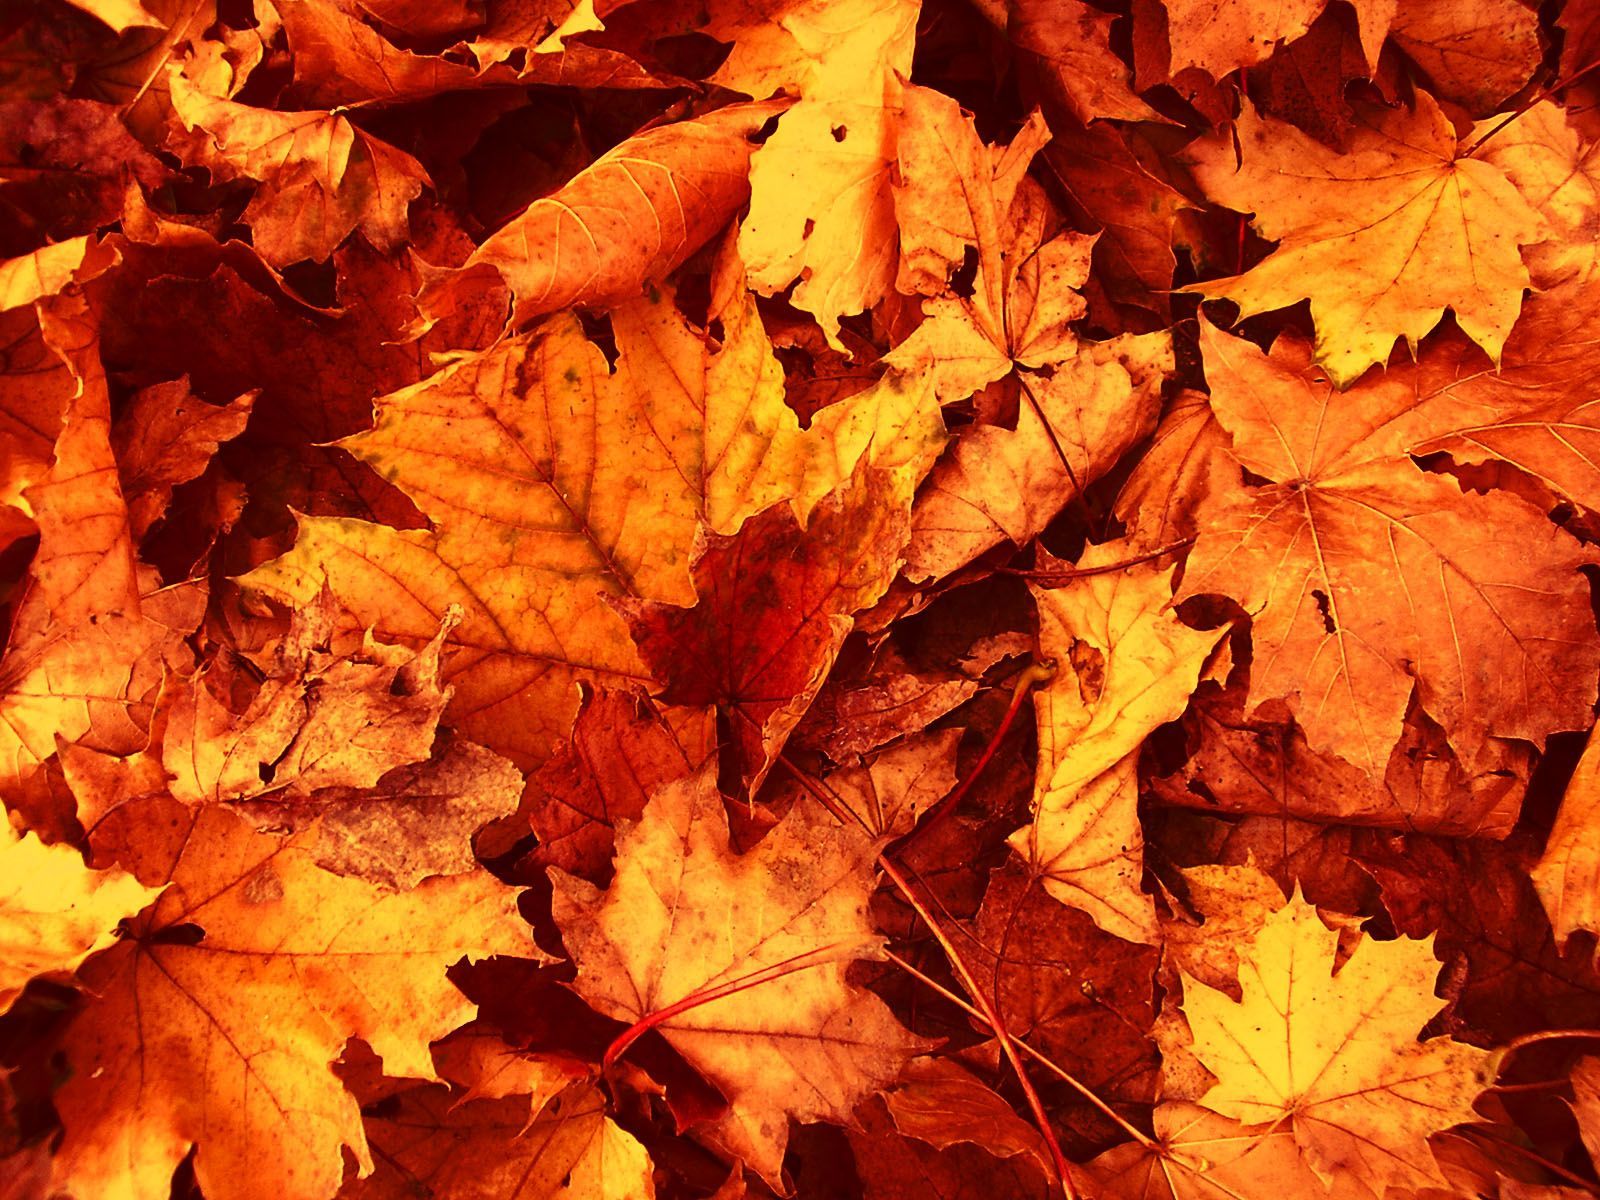 Fall Leaves Wallpaper High Definition. Fall leaves background, Autumn leaves wallpaper, Fall wallpaper